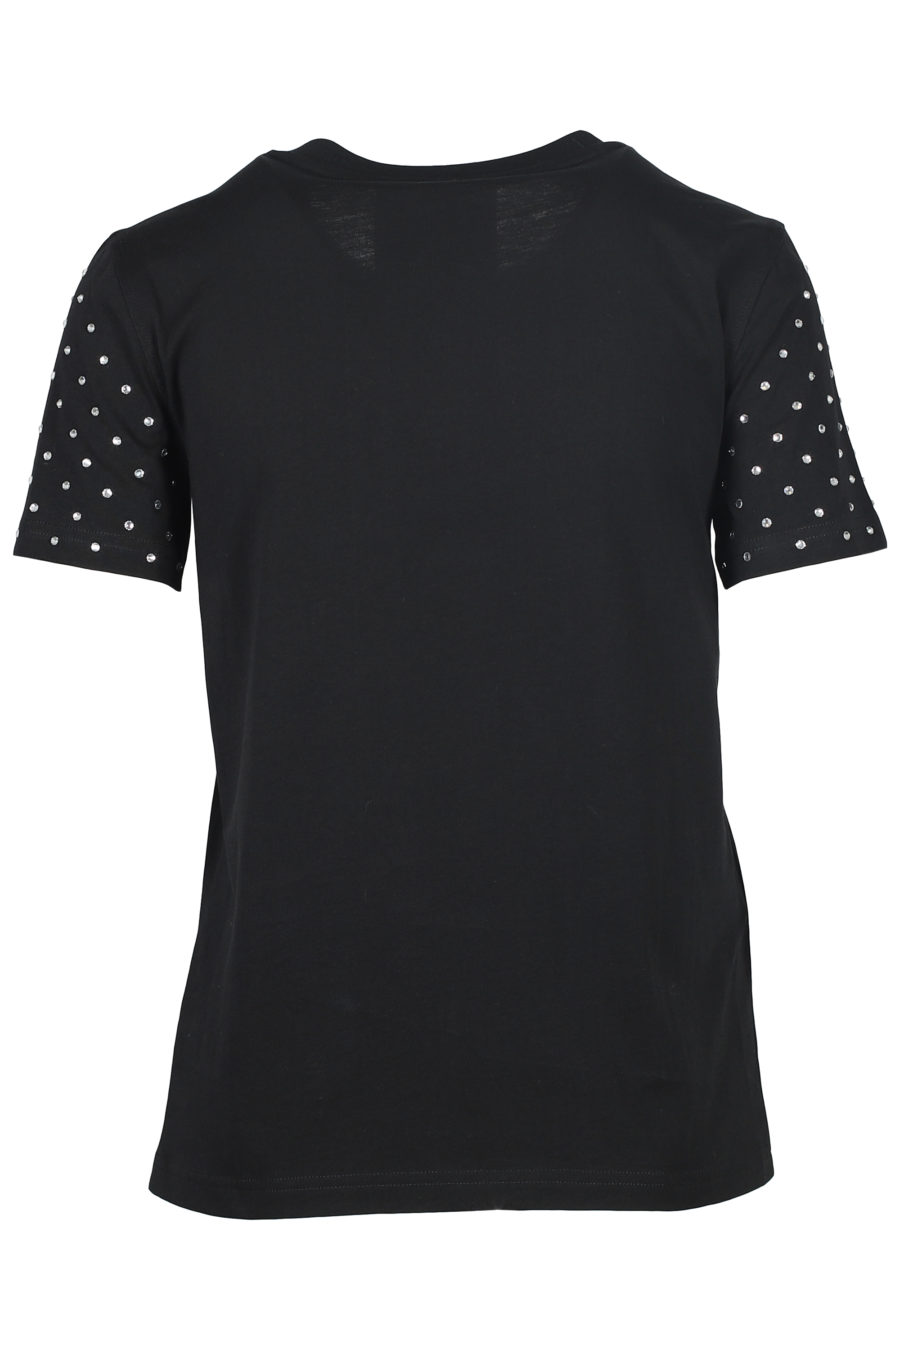 Schwarzes T-Shirt mit Strass-Teddybär - IMG 5515